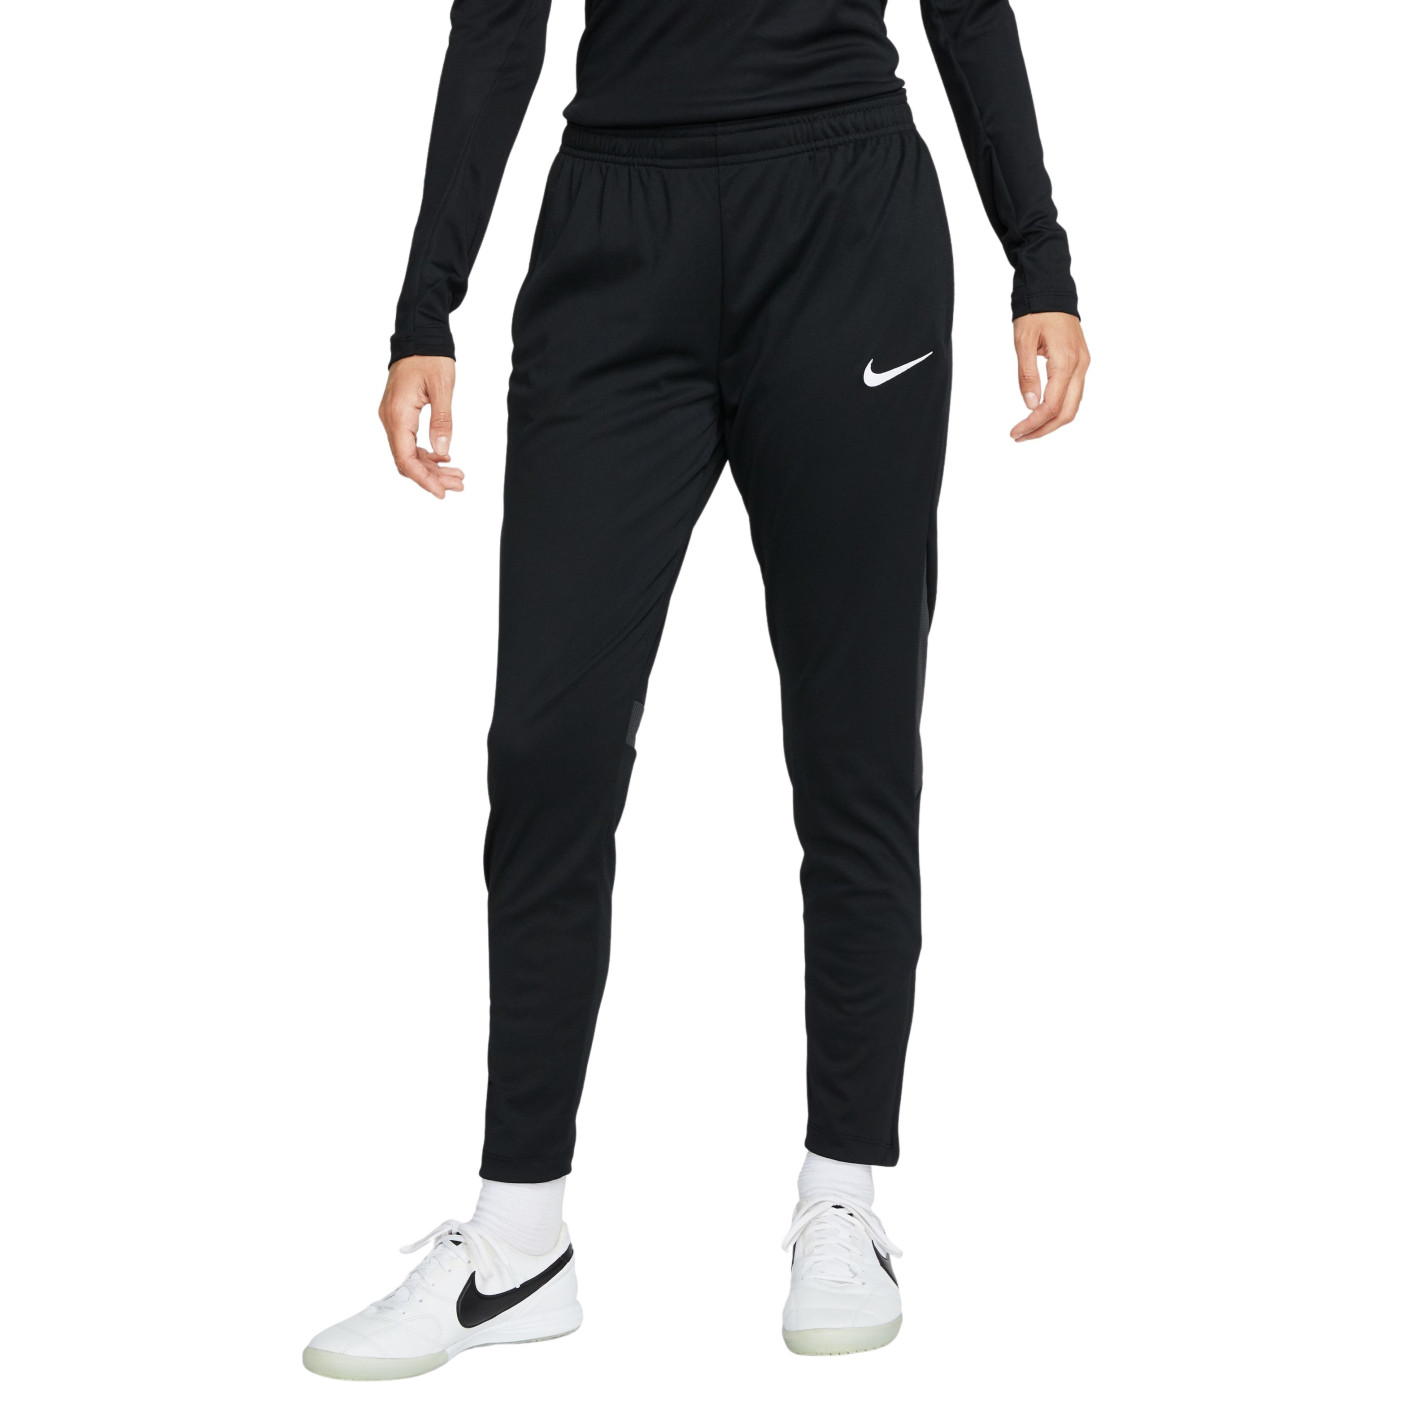 Nike Academy Pro Women's Training pants Black Grey